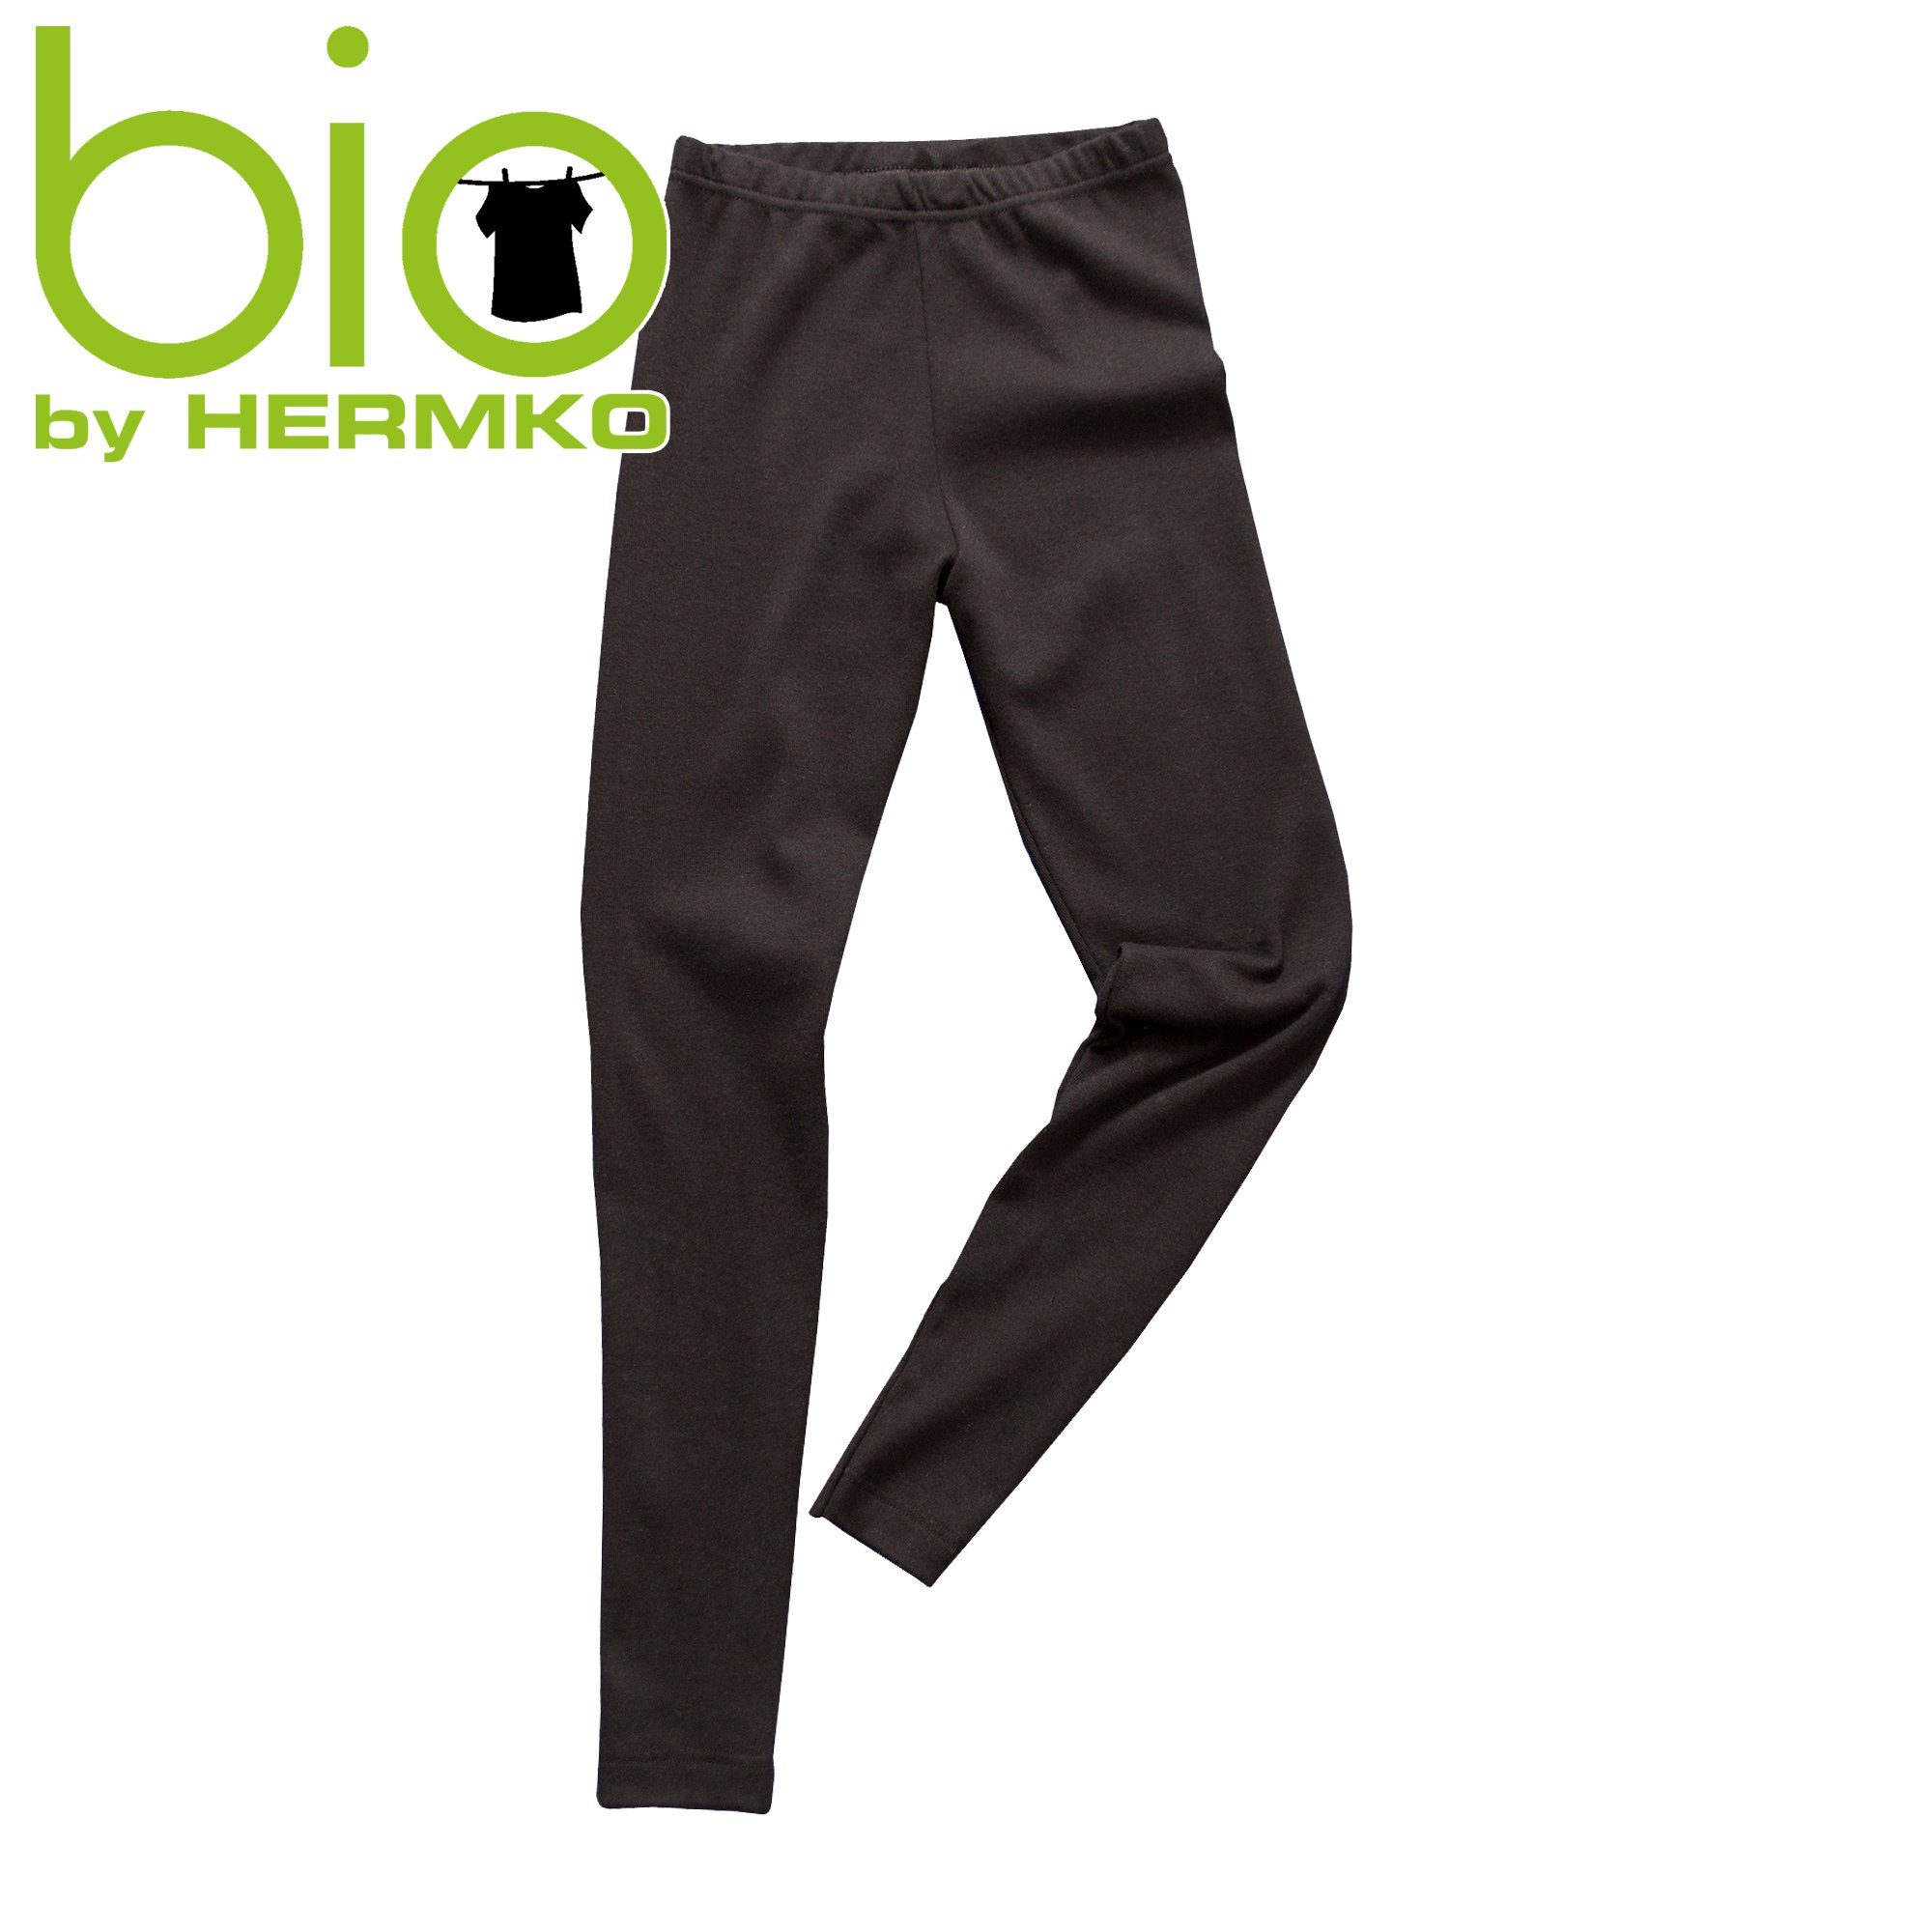 schwarz 2720 3er Legging Pack Leggings Kinder Bio-Baumwolle HERMKO aus